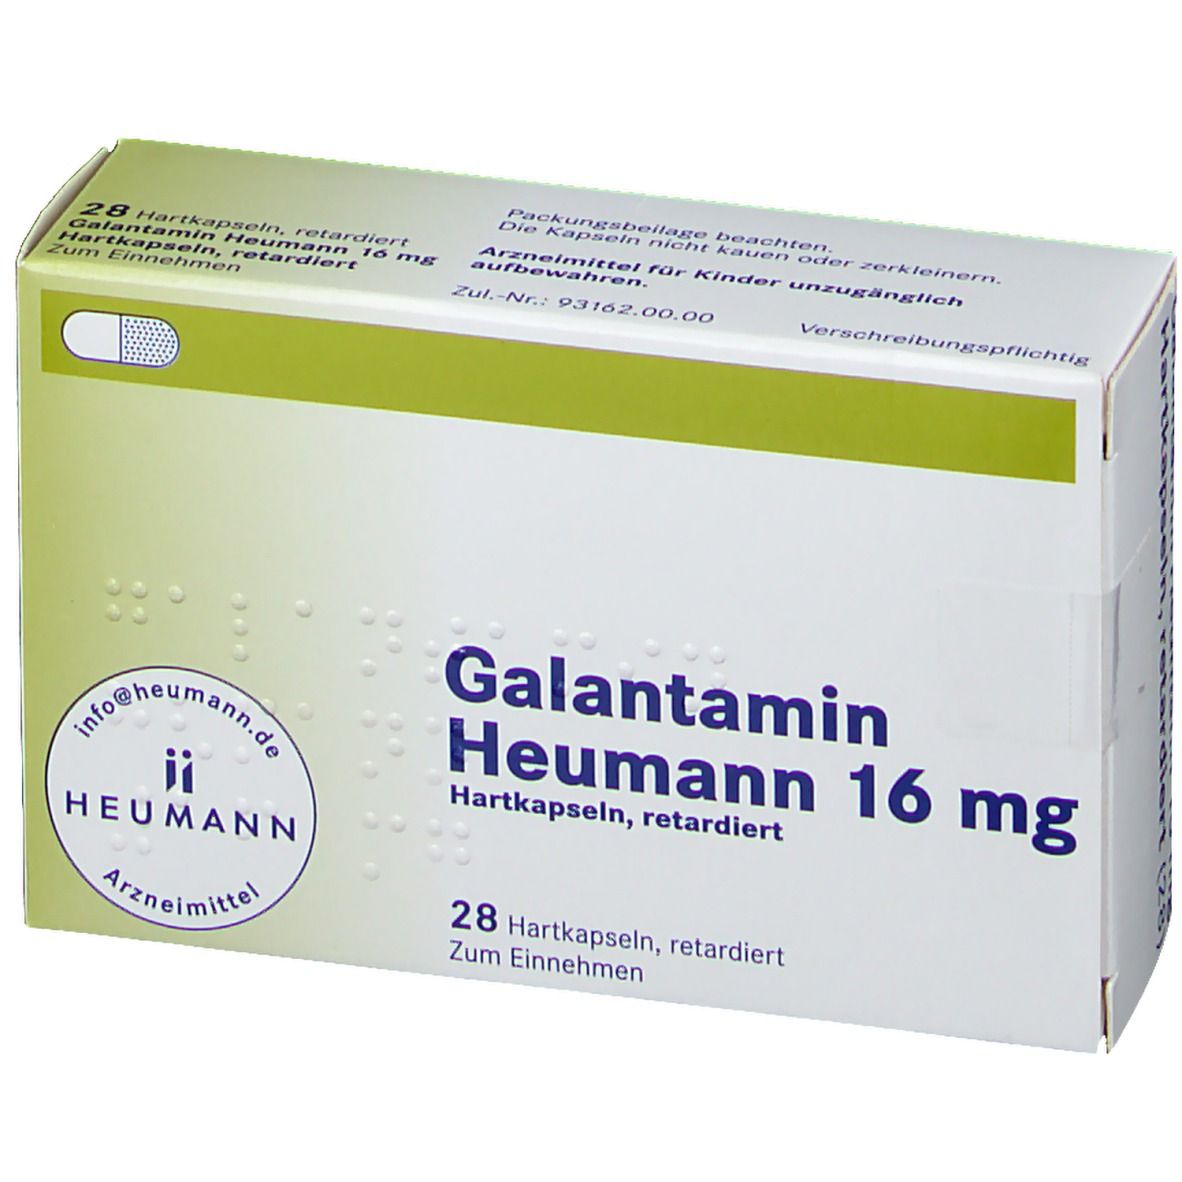 Galantamin Heumann 16 mg